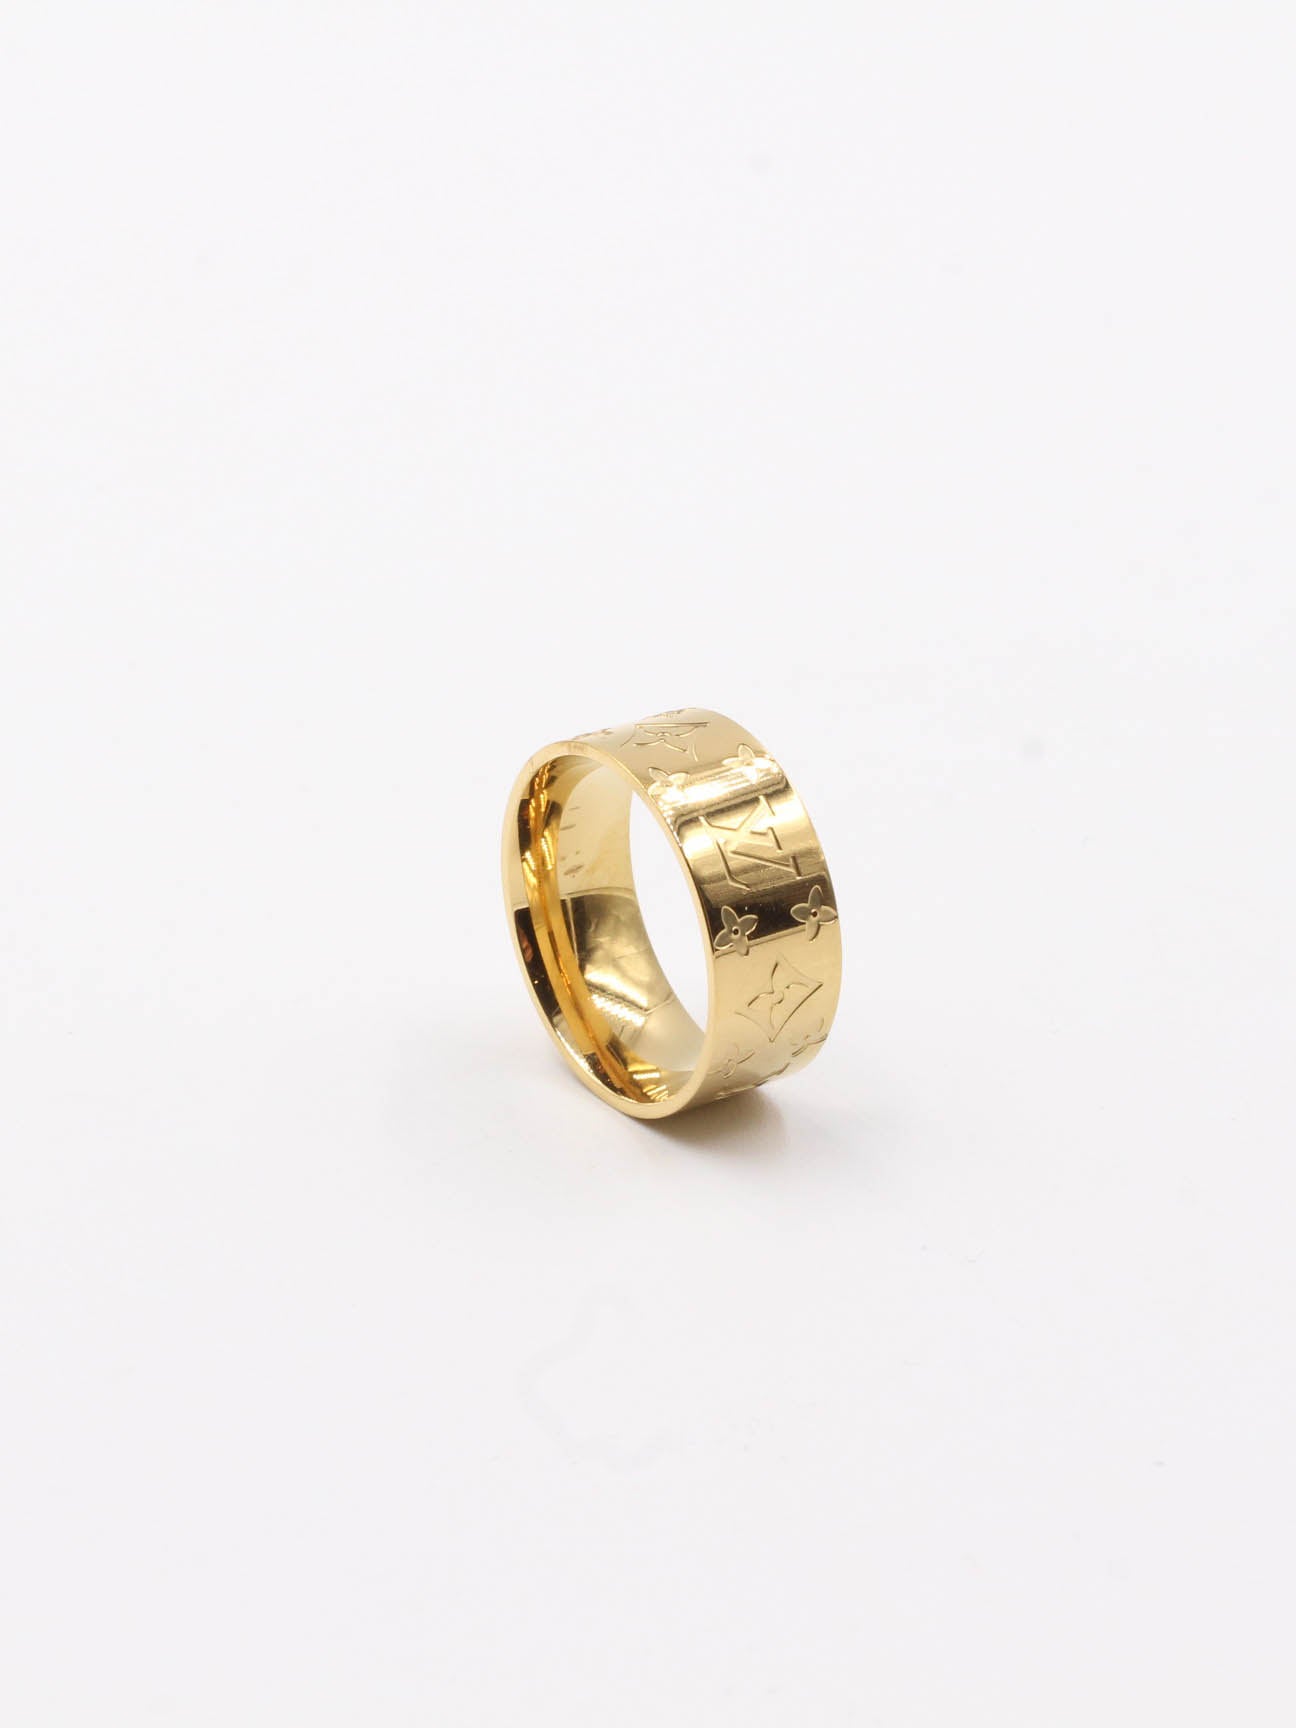 Louis Vuitton wide ring - خاتم لويس فيتون عريض خواتم Jewel ذهبي 7 